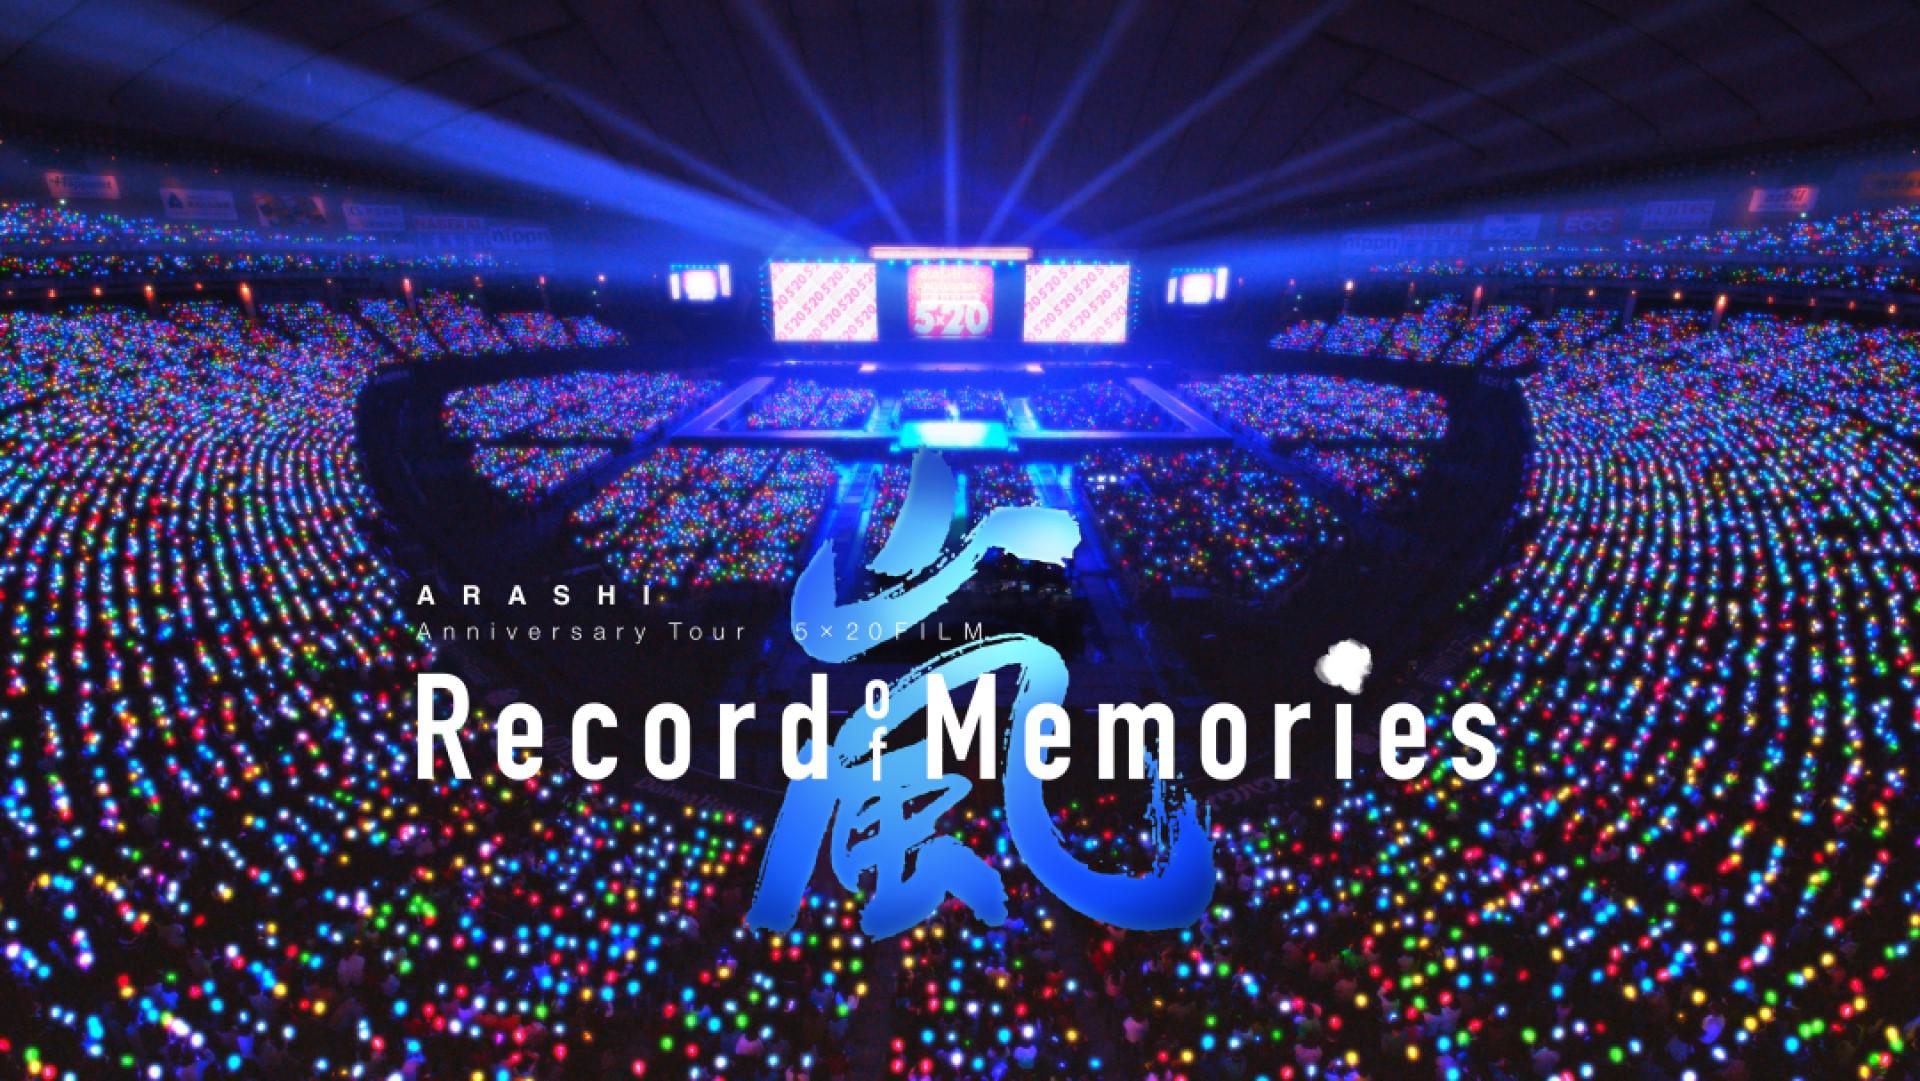 Arashi Anniversary Tour 5 Film Record Of Memories ドルビーシネマ にて絶賛公開中 松竹マルチプレックスシアターズ